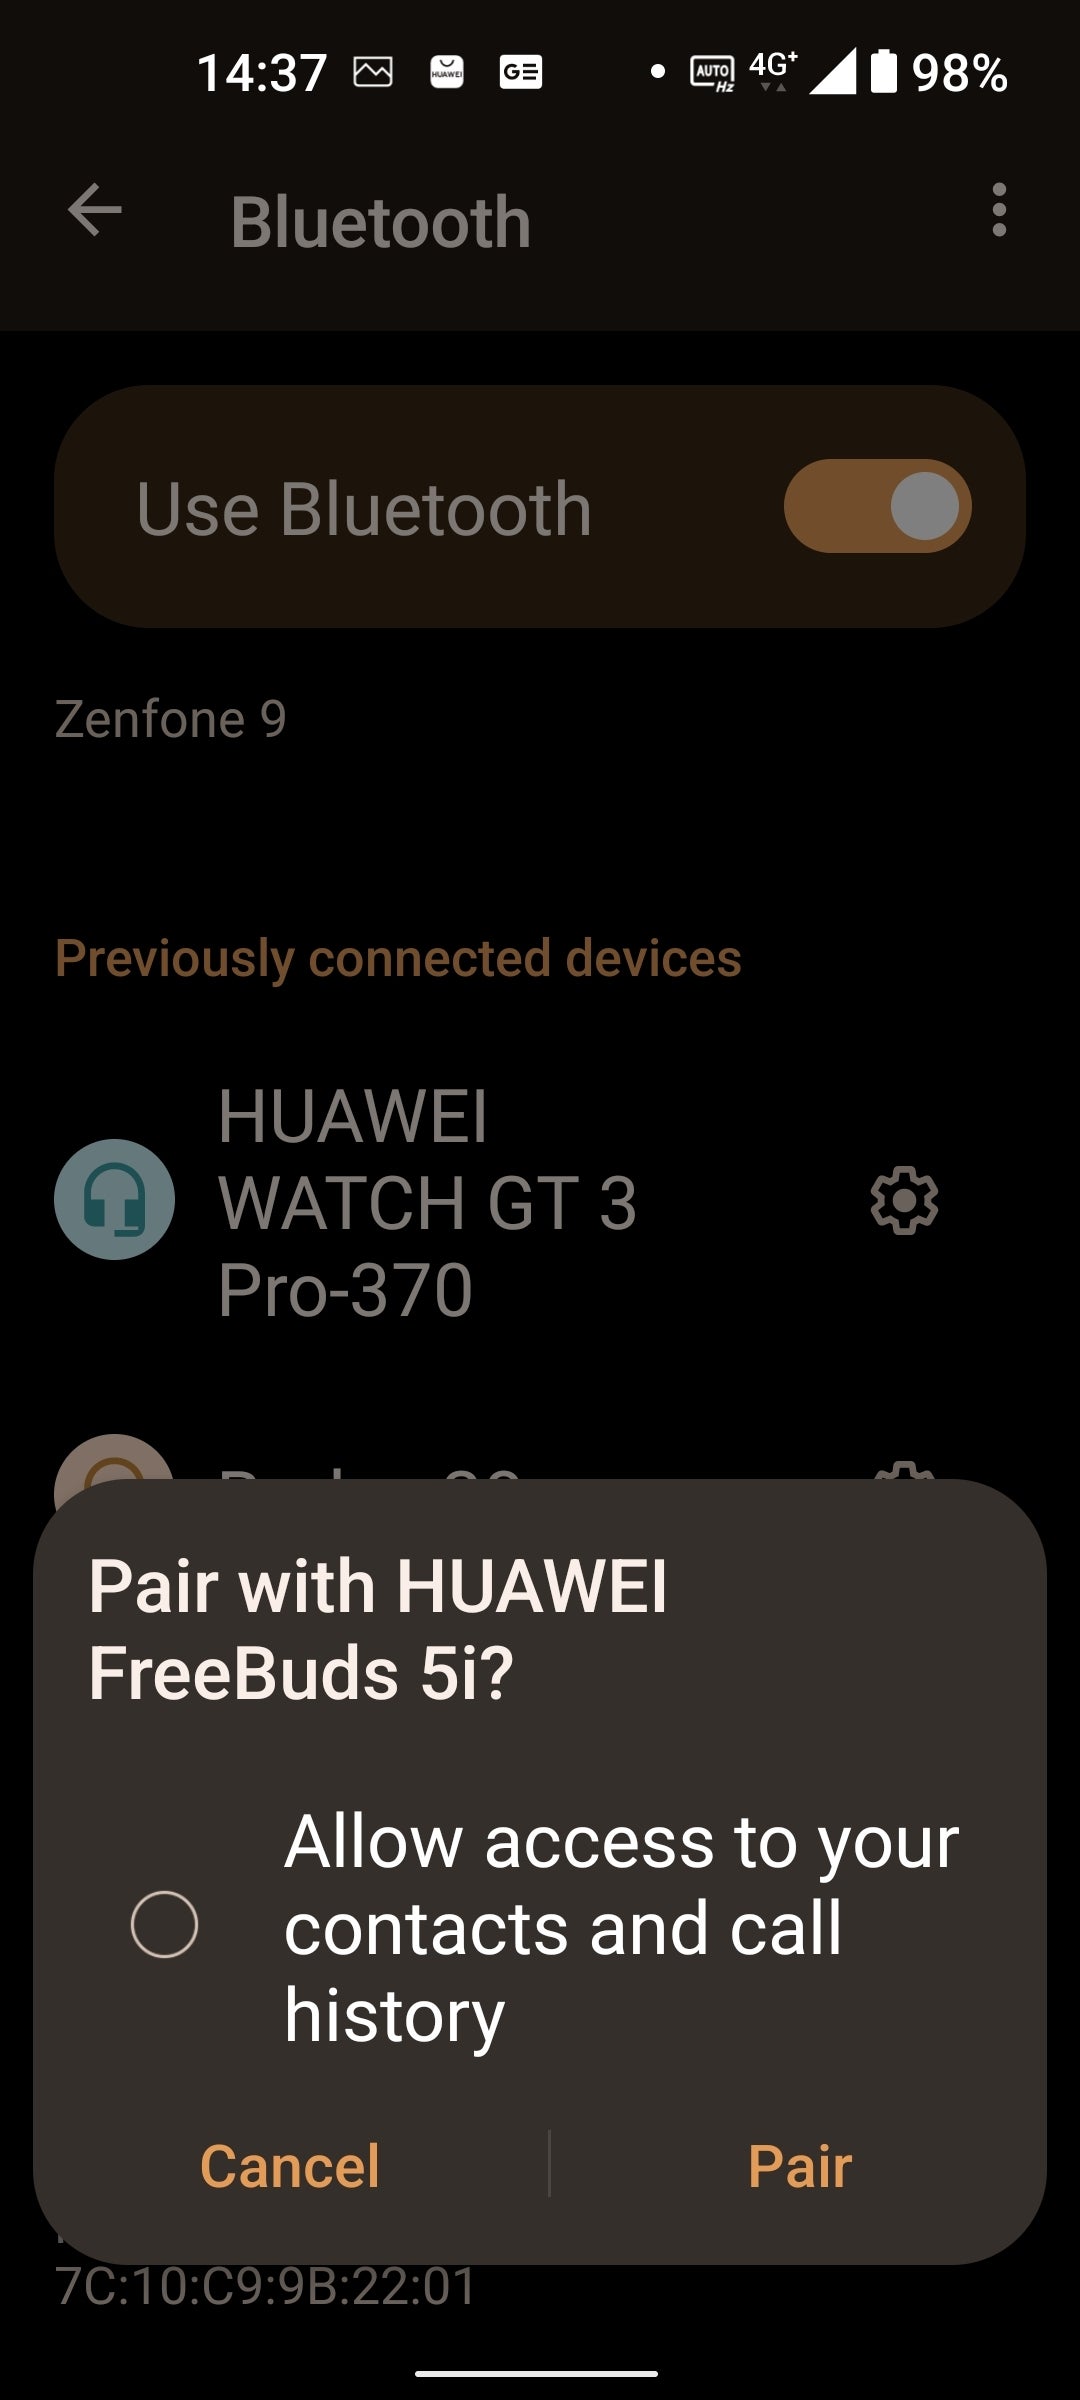 Huawei Freebuds 5i review – good sound, terrible controls - Galaxus